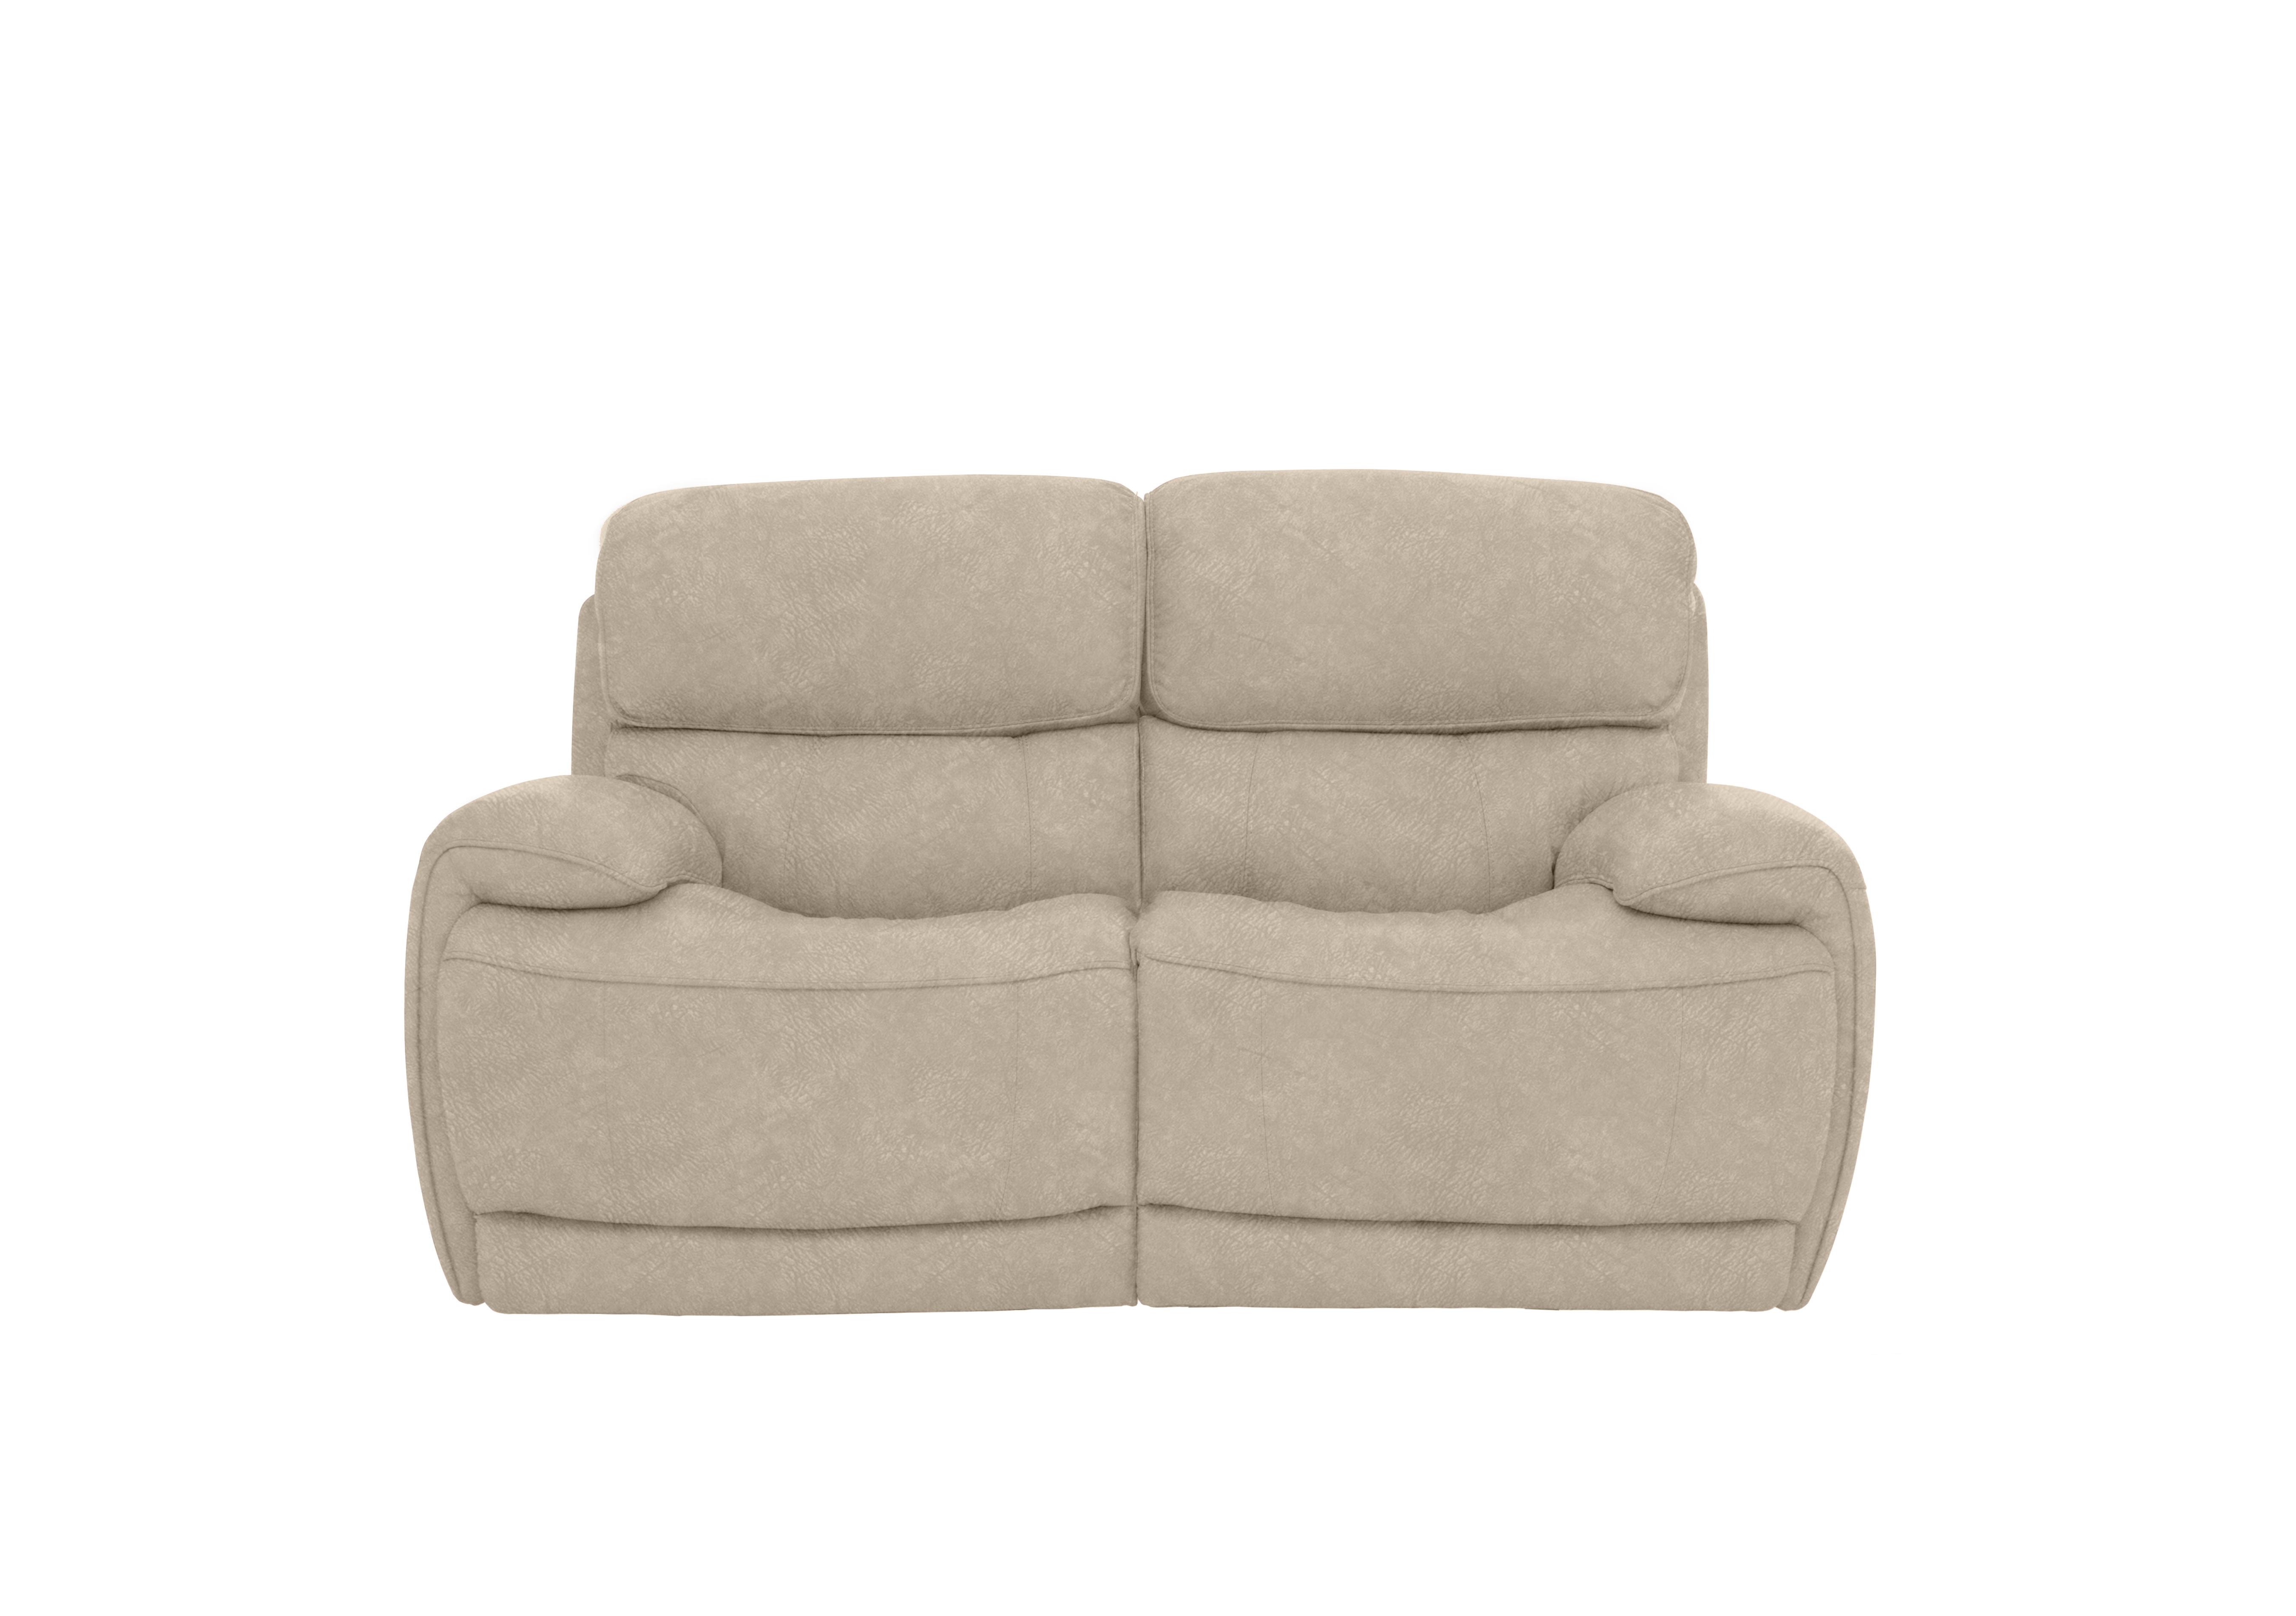 Rocco 2 Seater Fabric Power Rocker Sofa with Power Headrests in Bfa-Bnn-R26 Fv2 Cream on Furniture Village